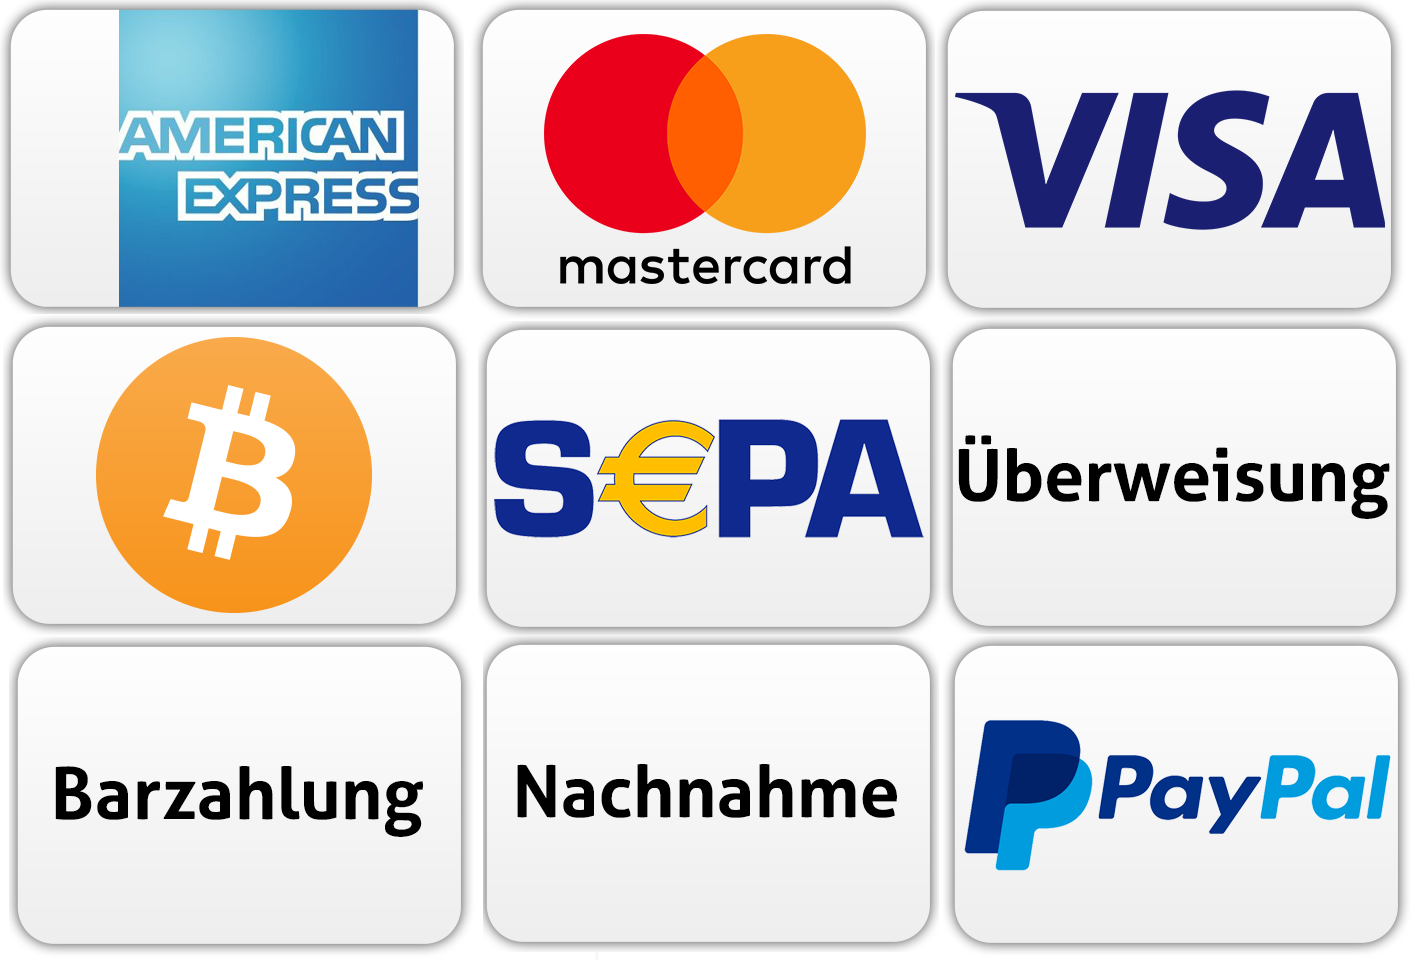 amex-mastercard-visa-sepa-ueberweisung-nachnahme-paypal-barzahlung-kryptowaehrung-bitcoin-litecoin-ripple-dash-zcash